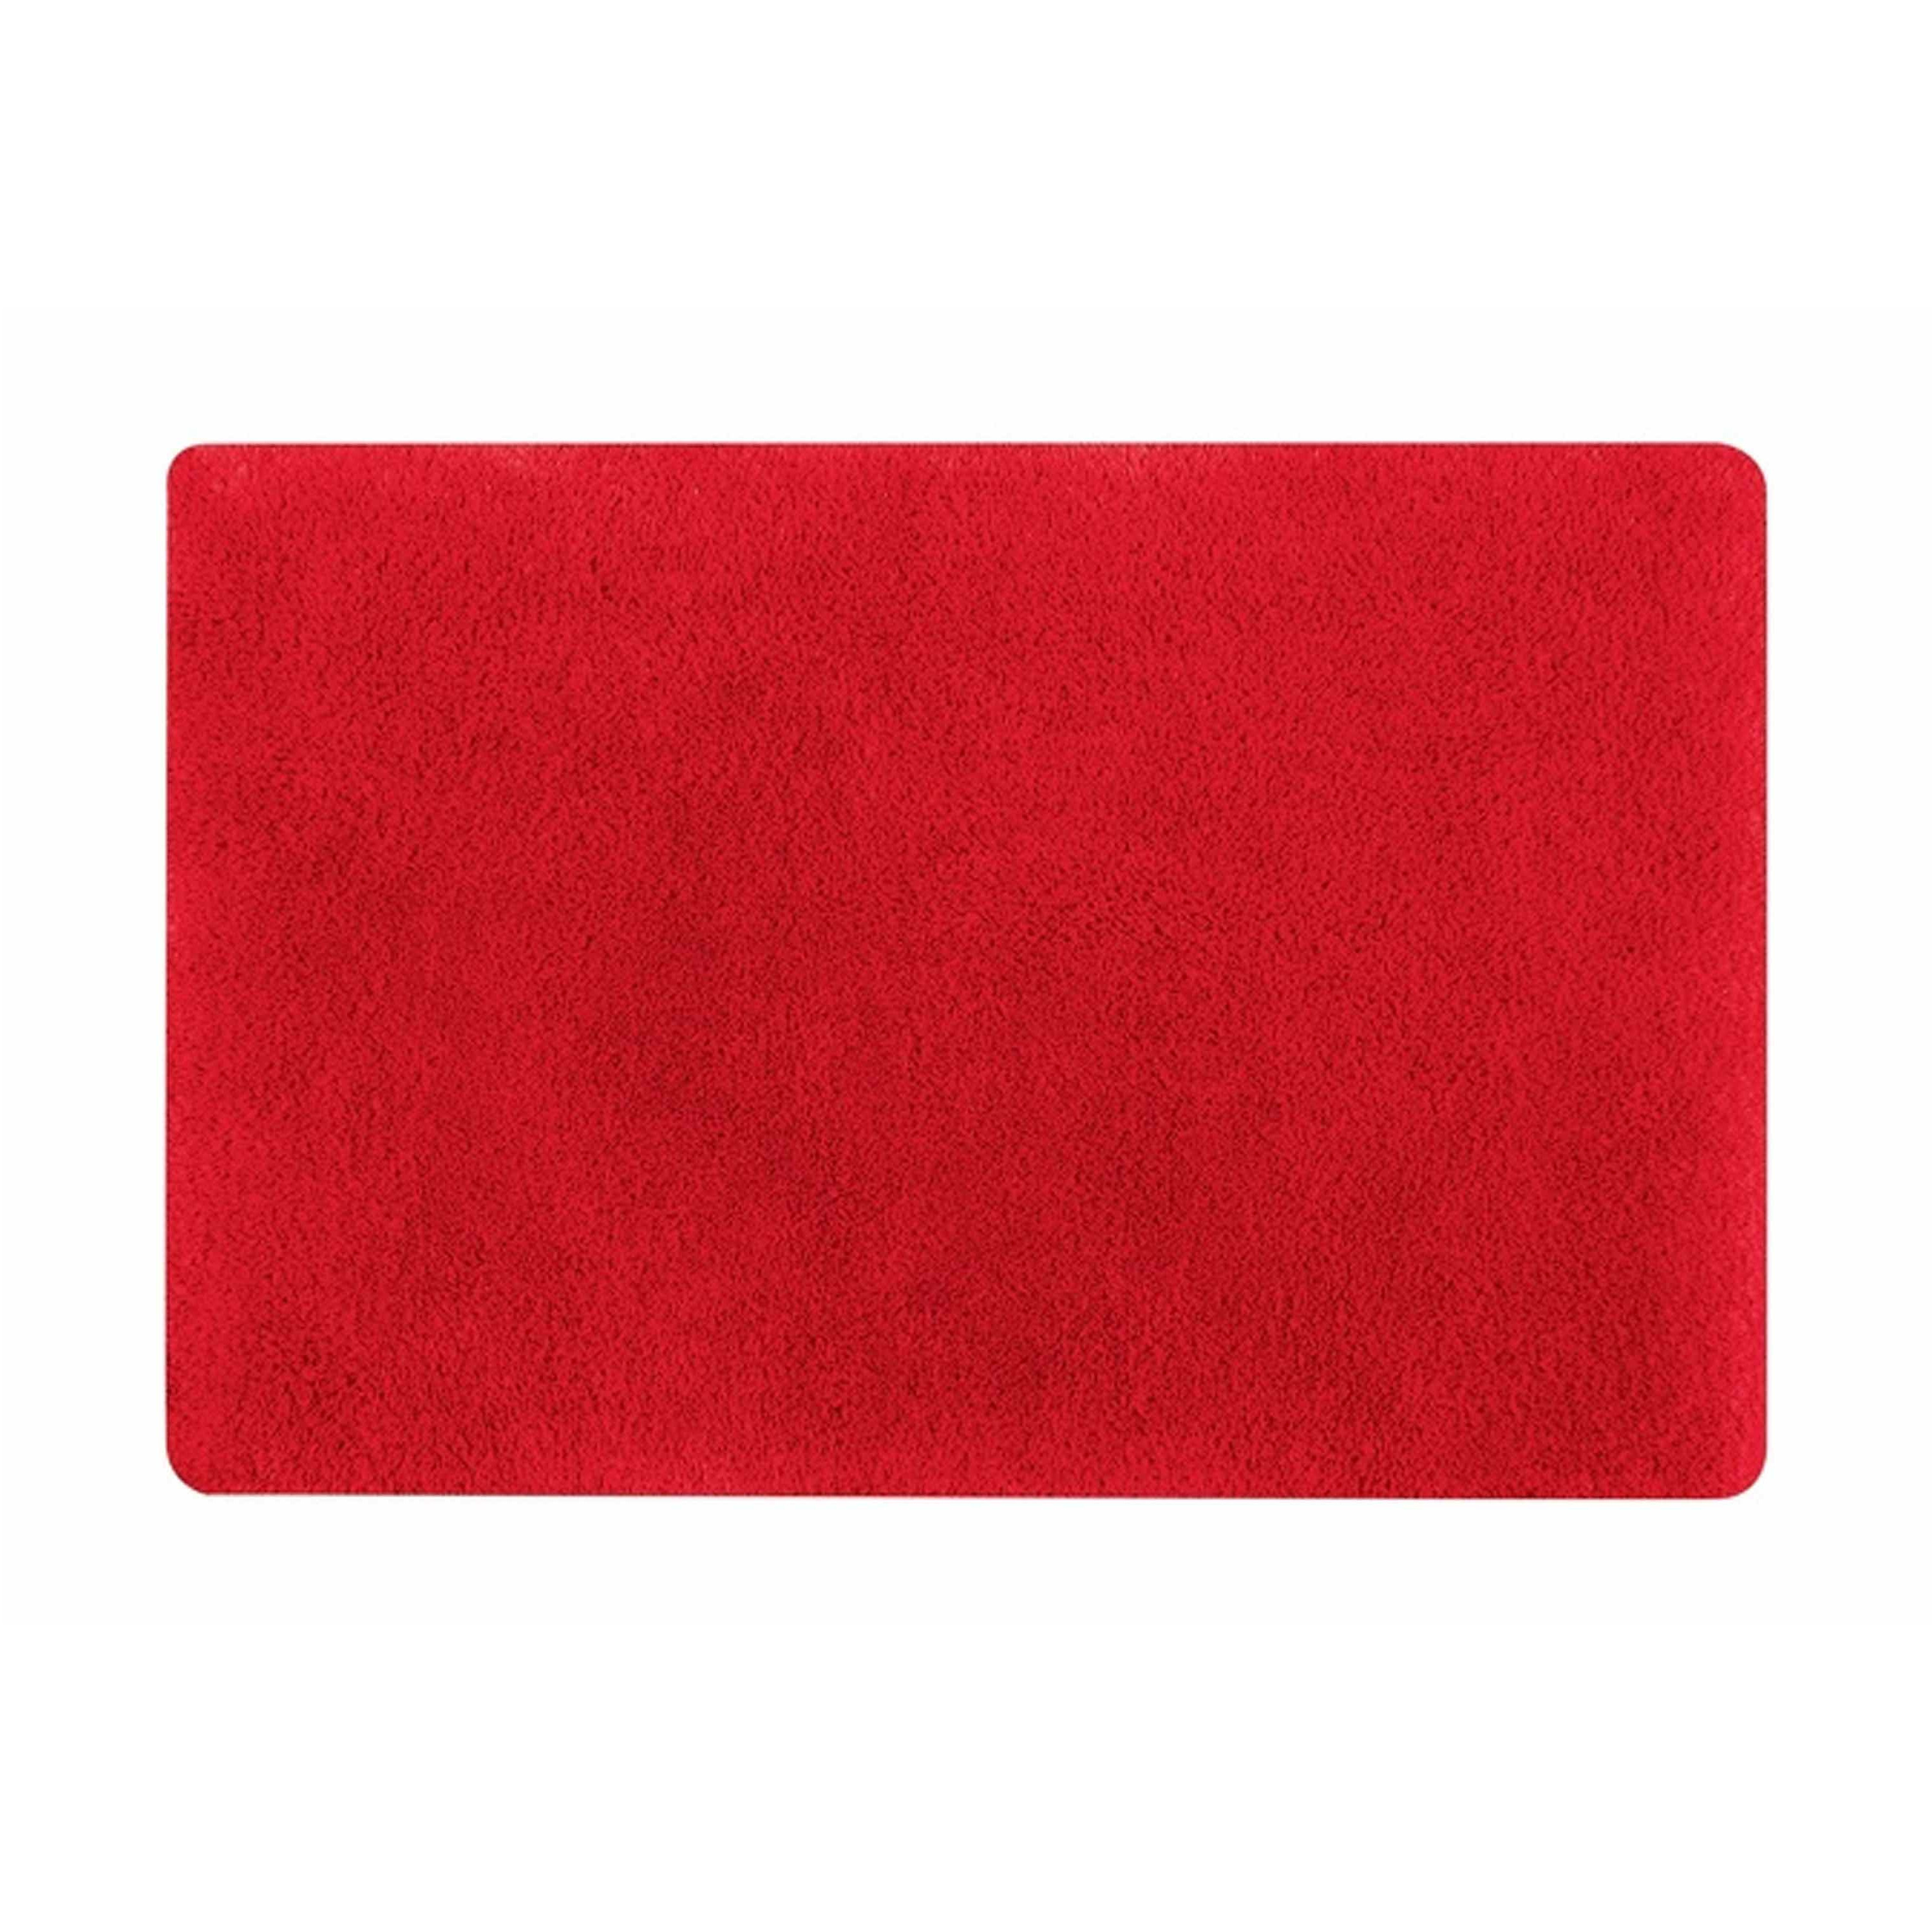 Spirella badkamer vloer kleedje-badmat tapijt hoogpolig en luxe uitvoering rood 50 x 80 cm Microfibe